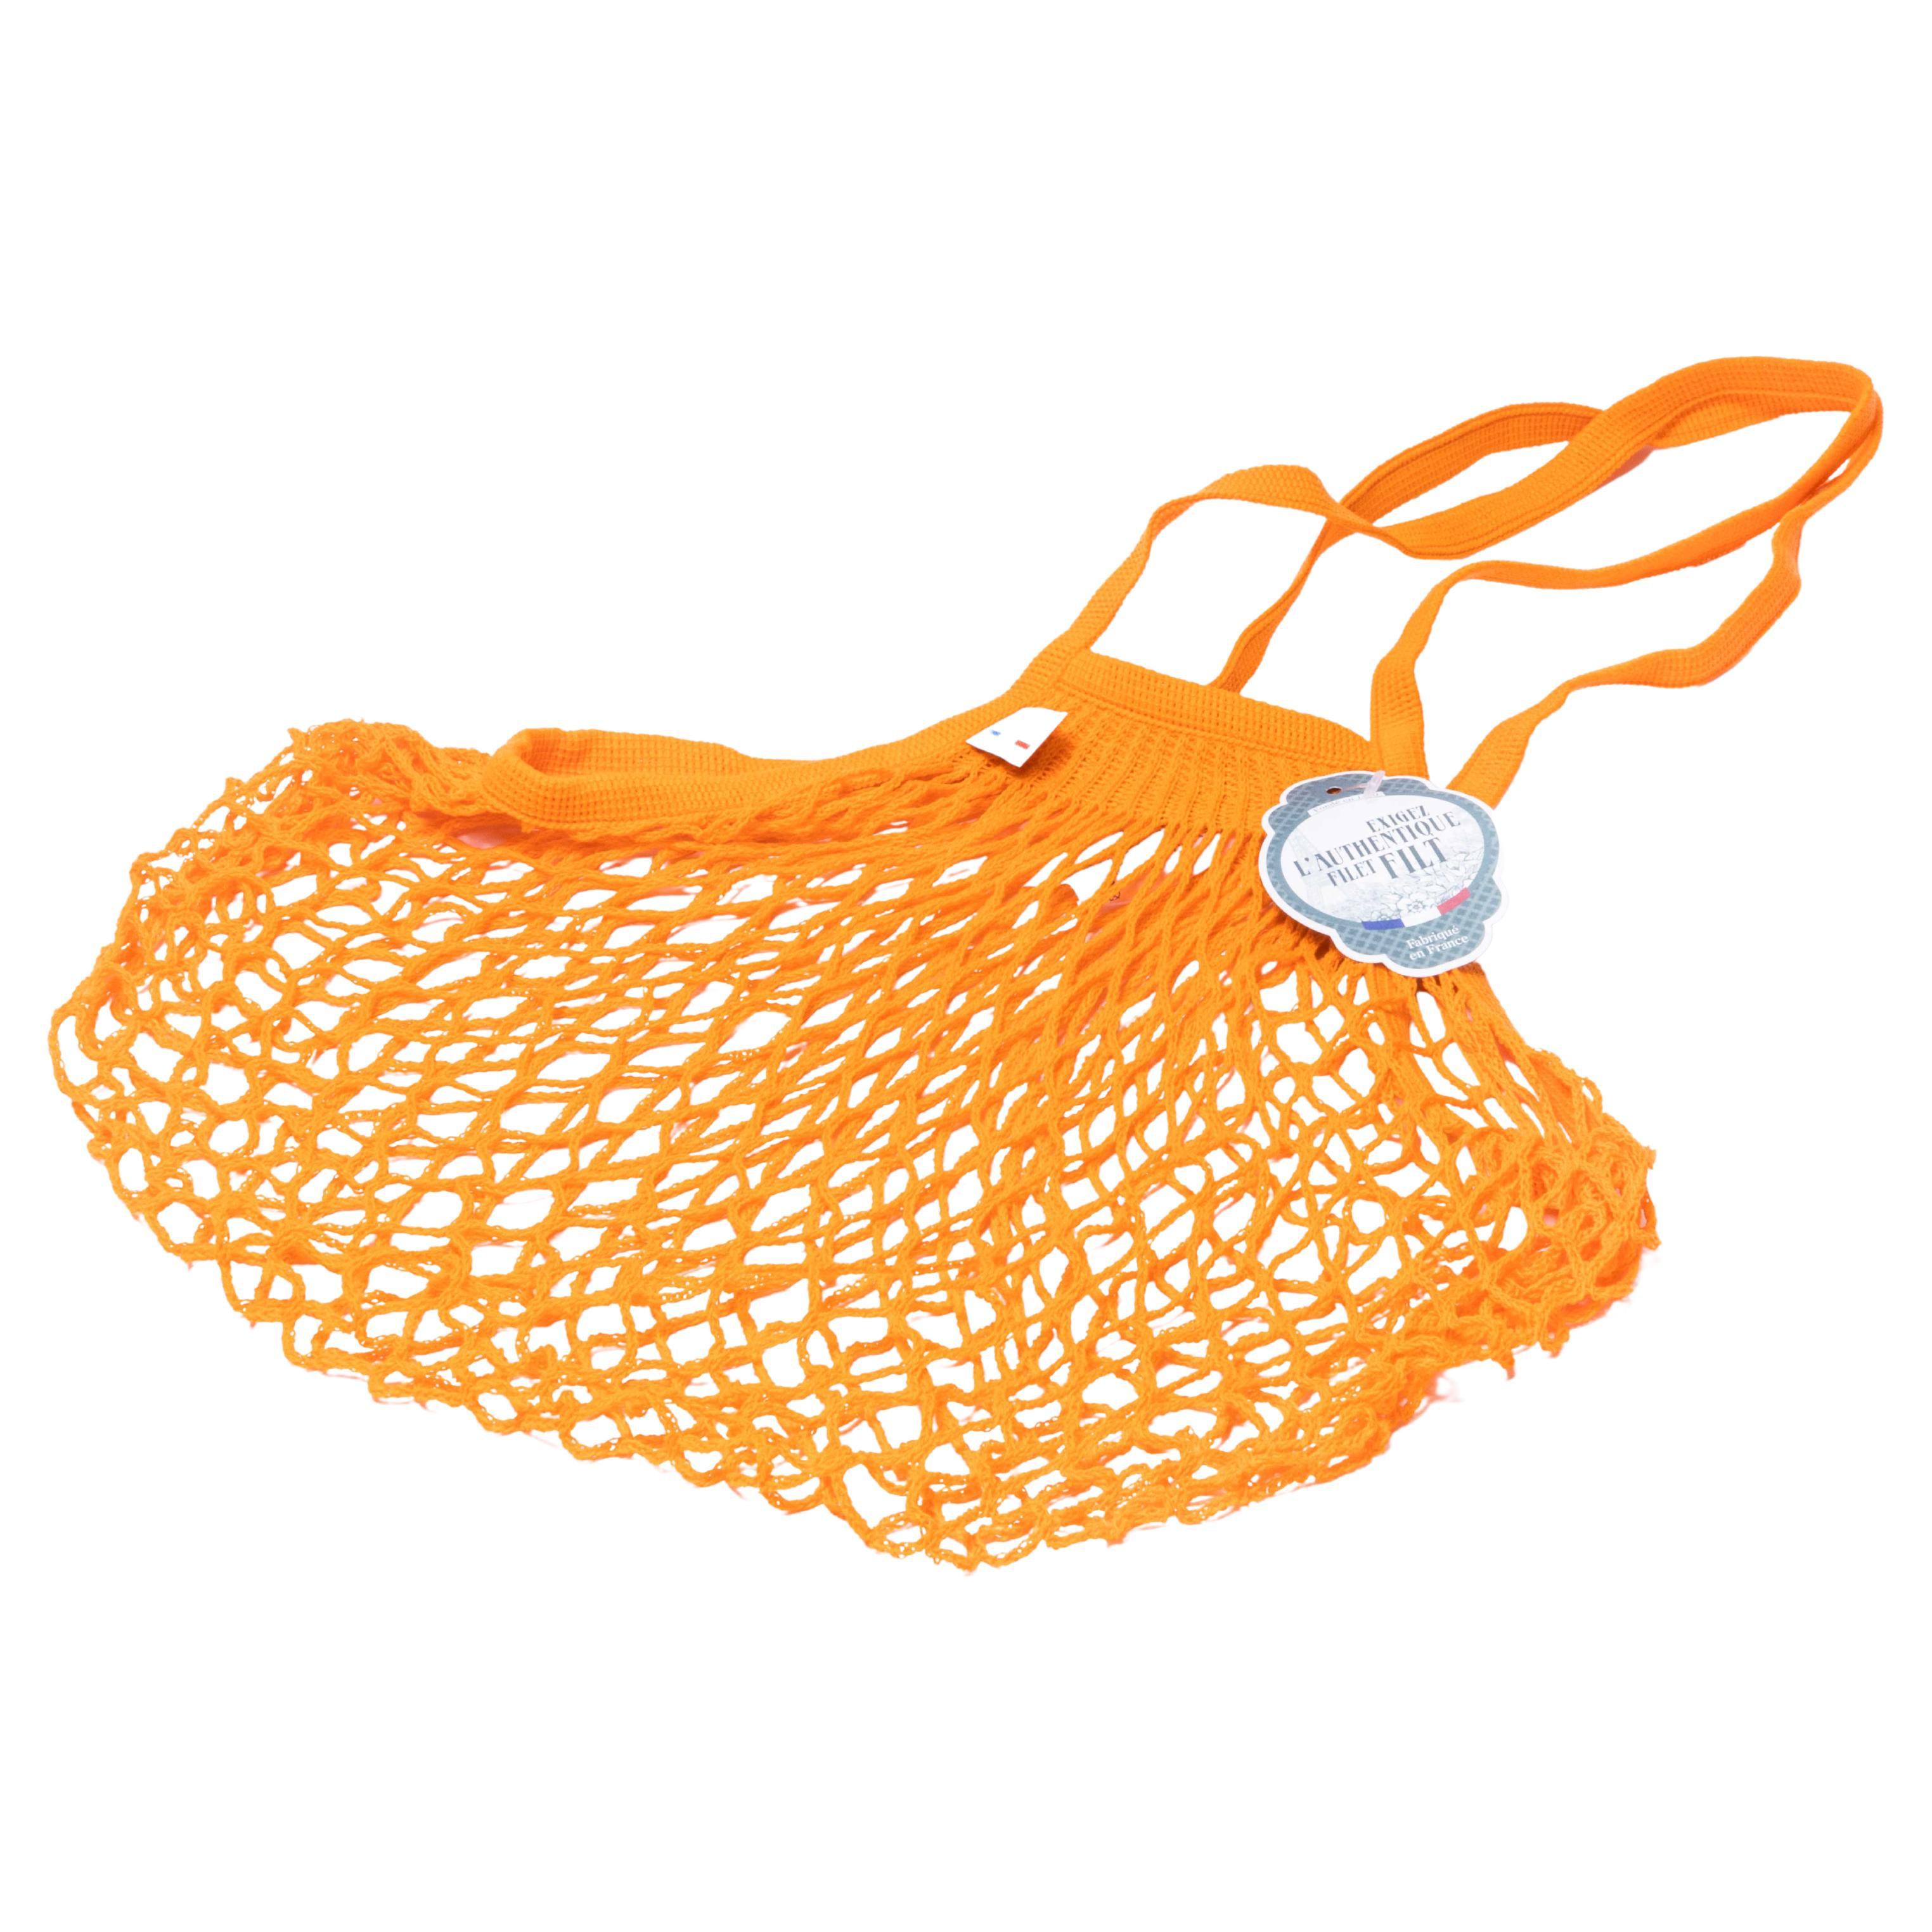 Filt, Orange Net Cotton Carry Bag